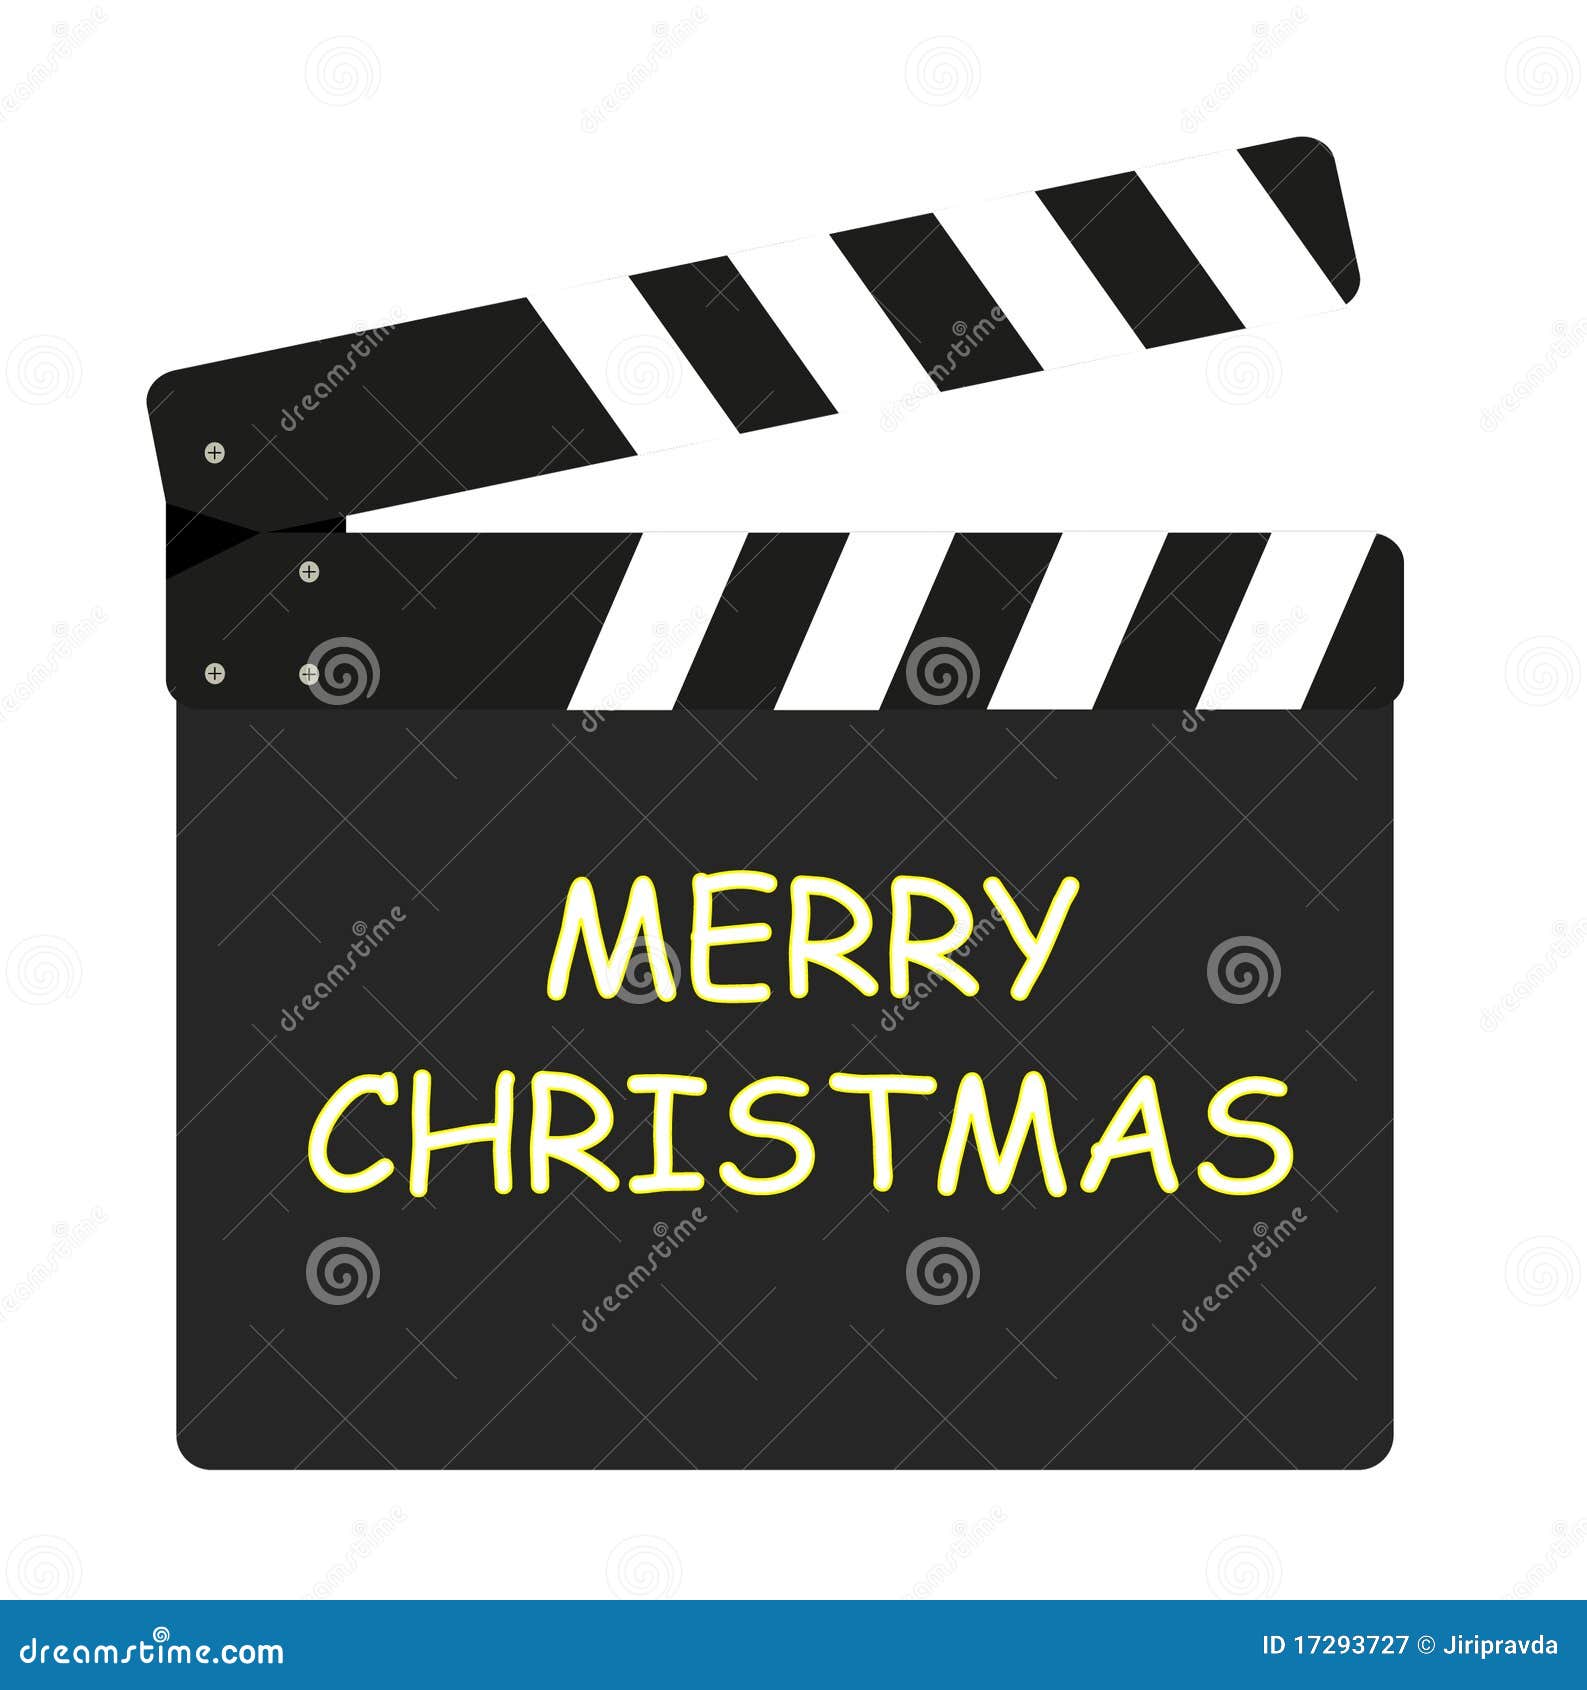 film flap - merry christmas